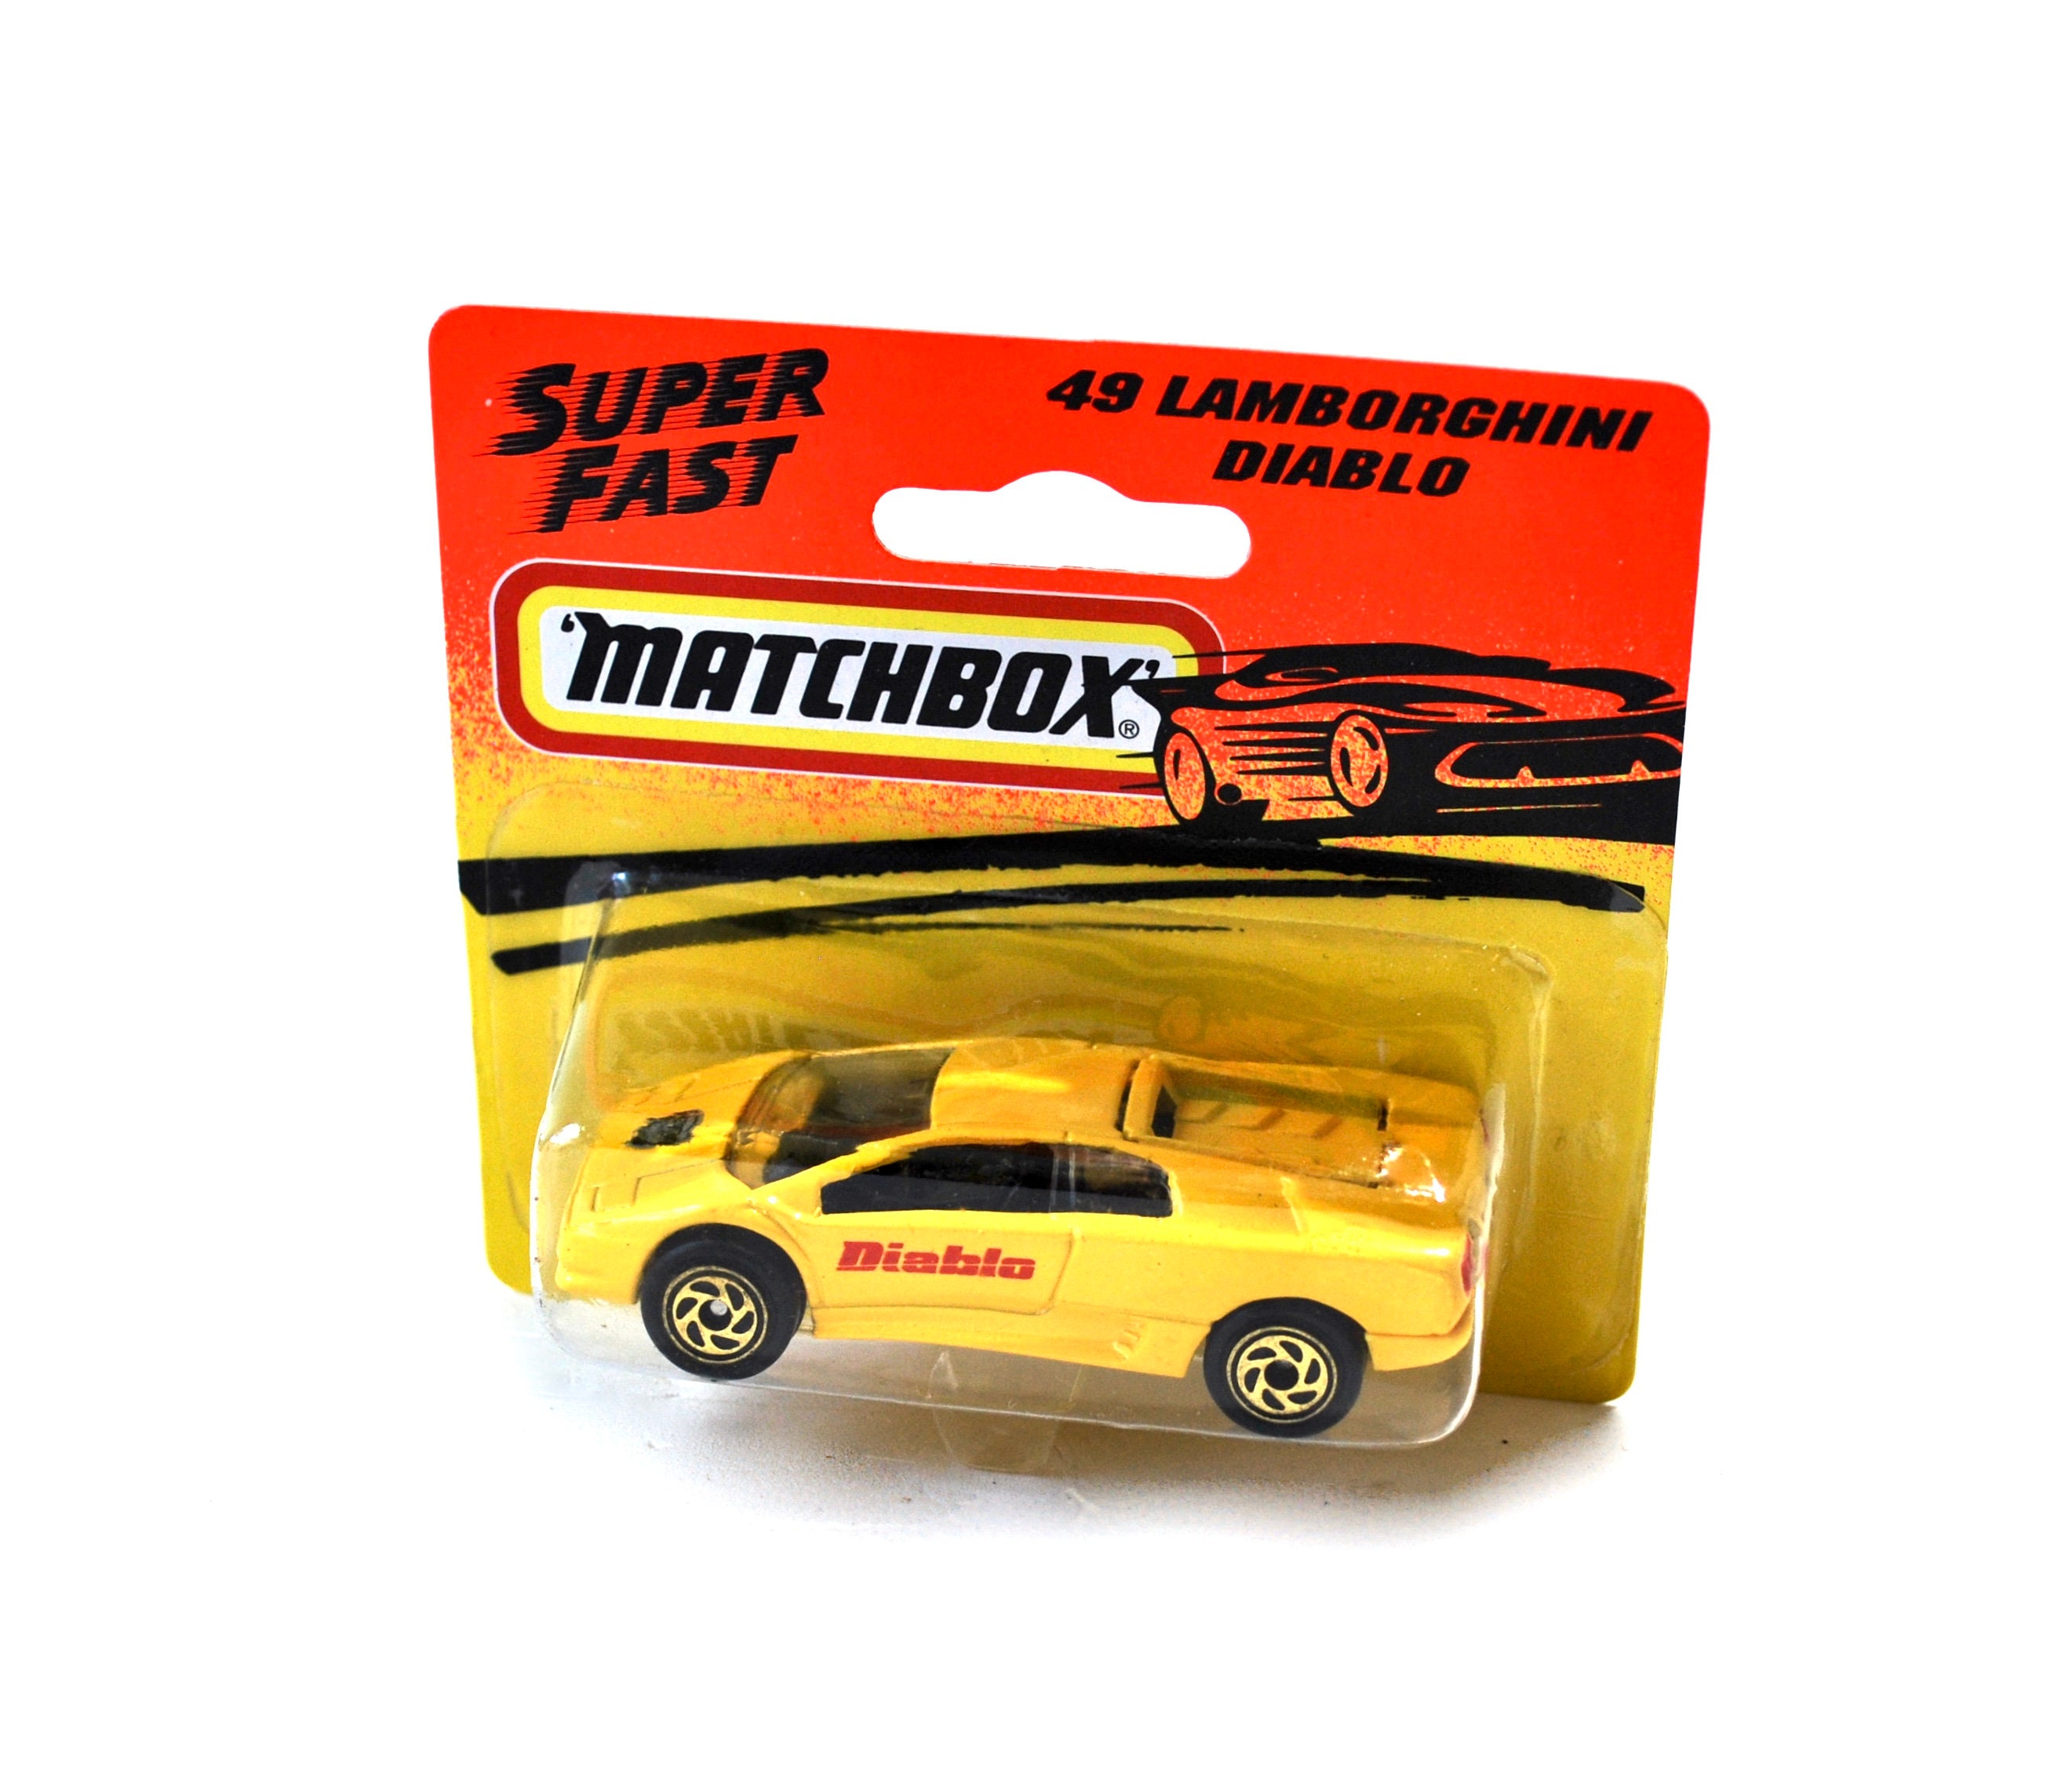 Matchbox Lamborghini Diablo MB49 Old Stock Carded - Etsy Australia